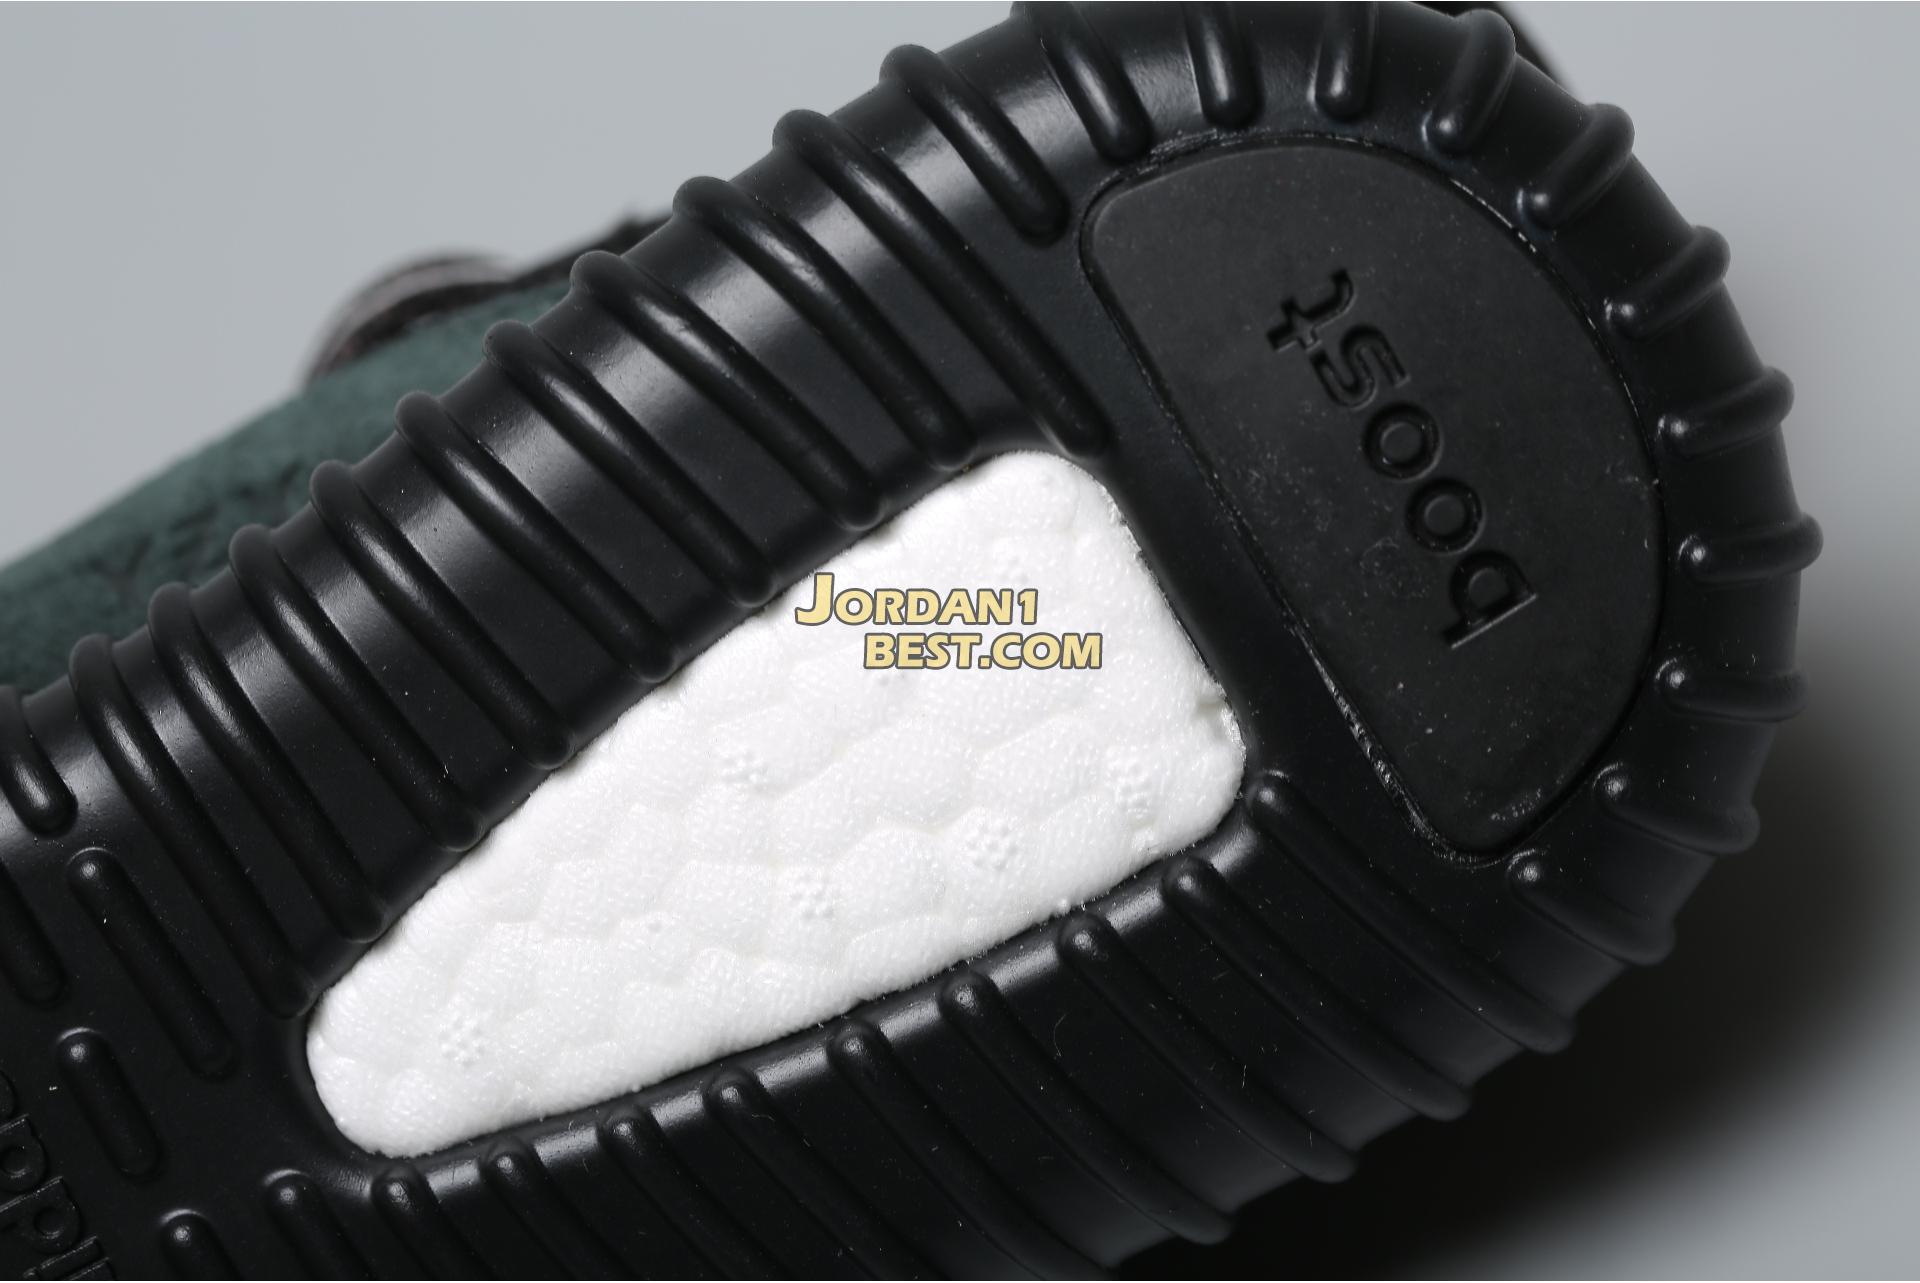 Adidas Yeezy Boost 350 "Pirate Black" AQ2659